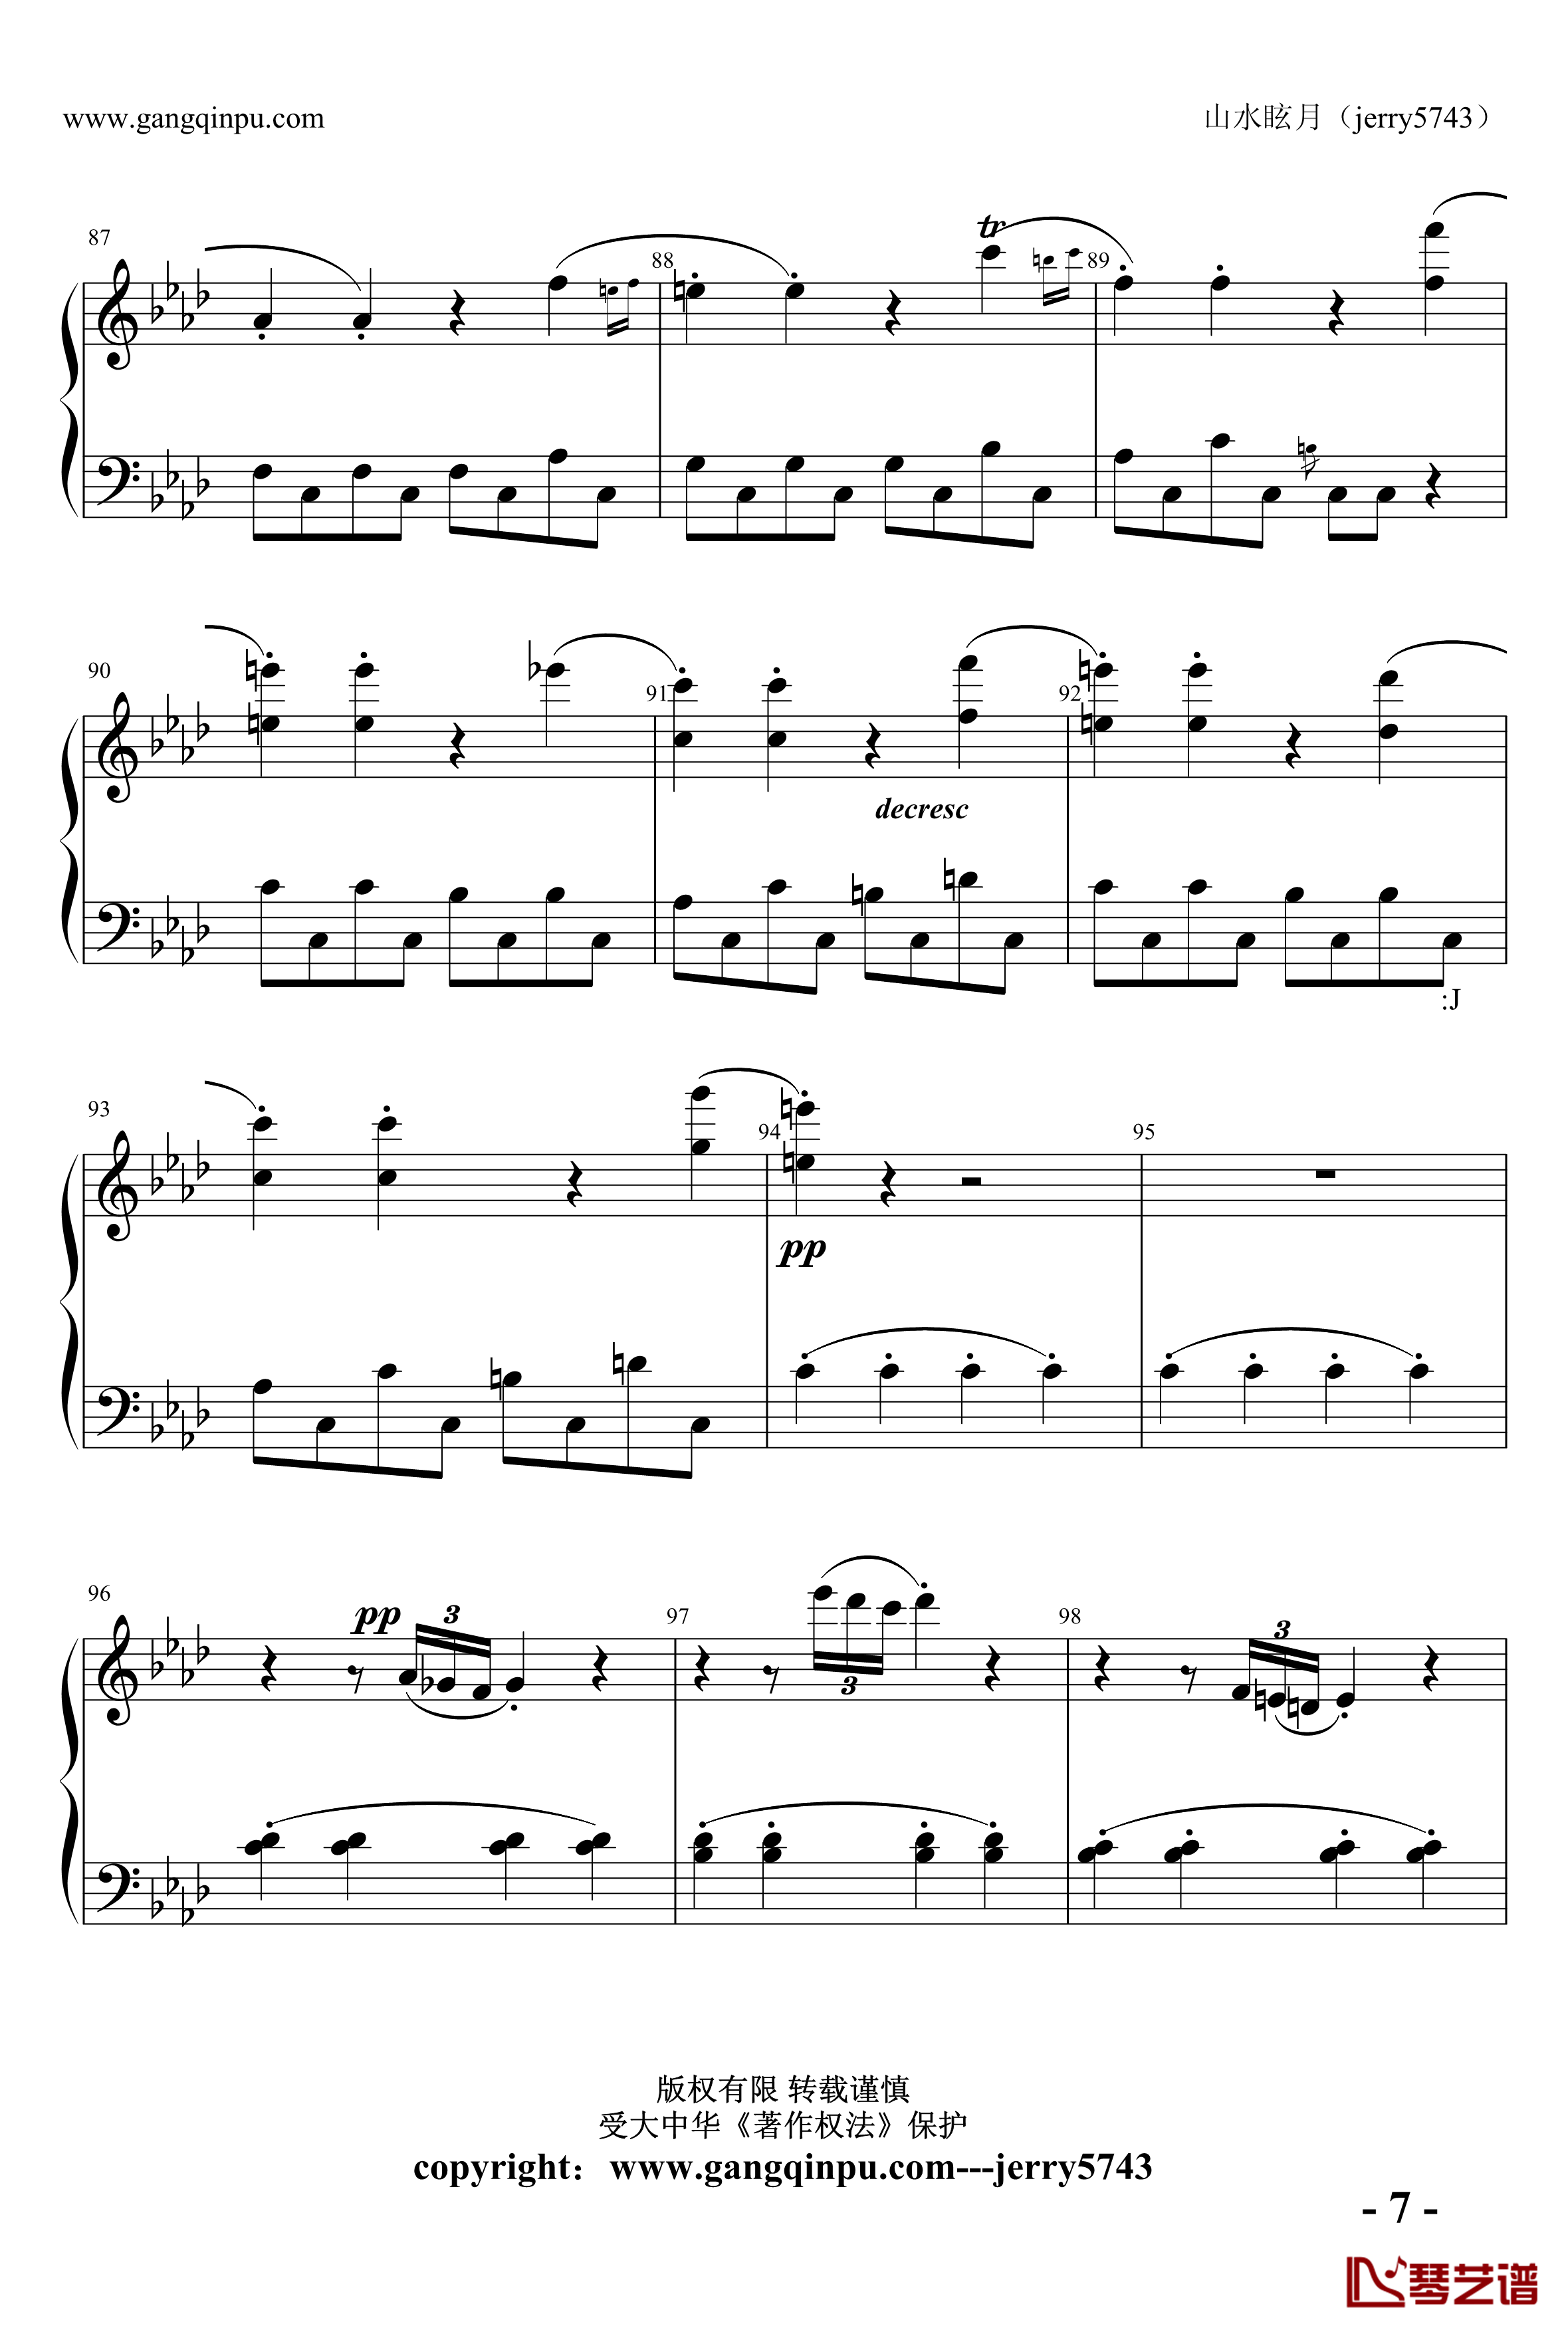 Piano Sonata No 1 part 1钢琴谱-贝多芬-beethoven7